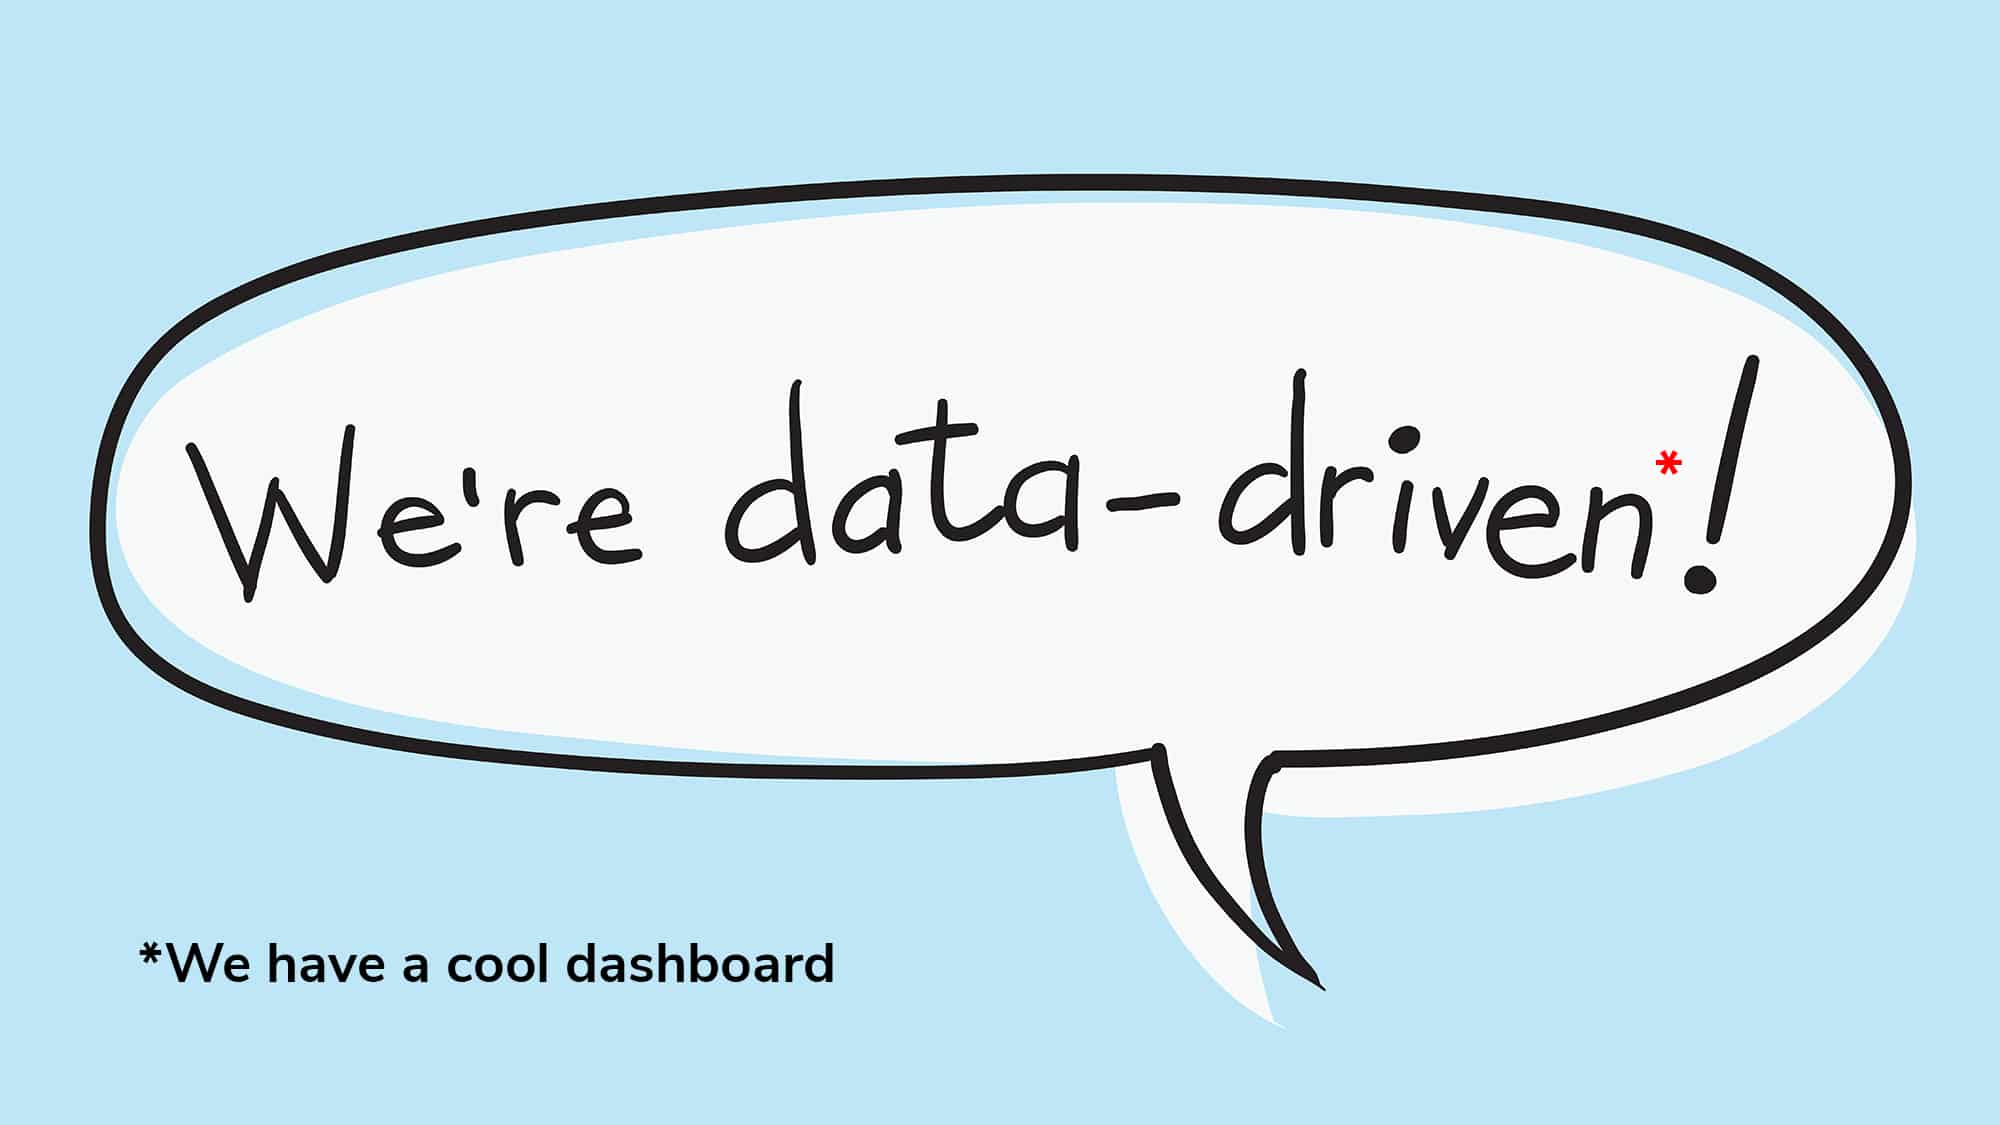 Business Buzzword: "We're data-driven" - vector handwritten phrase